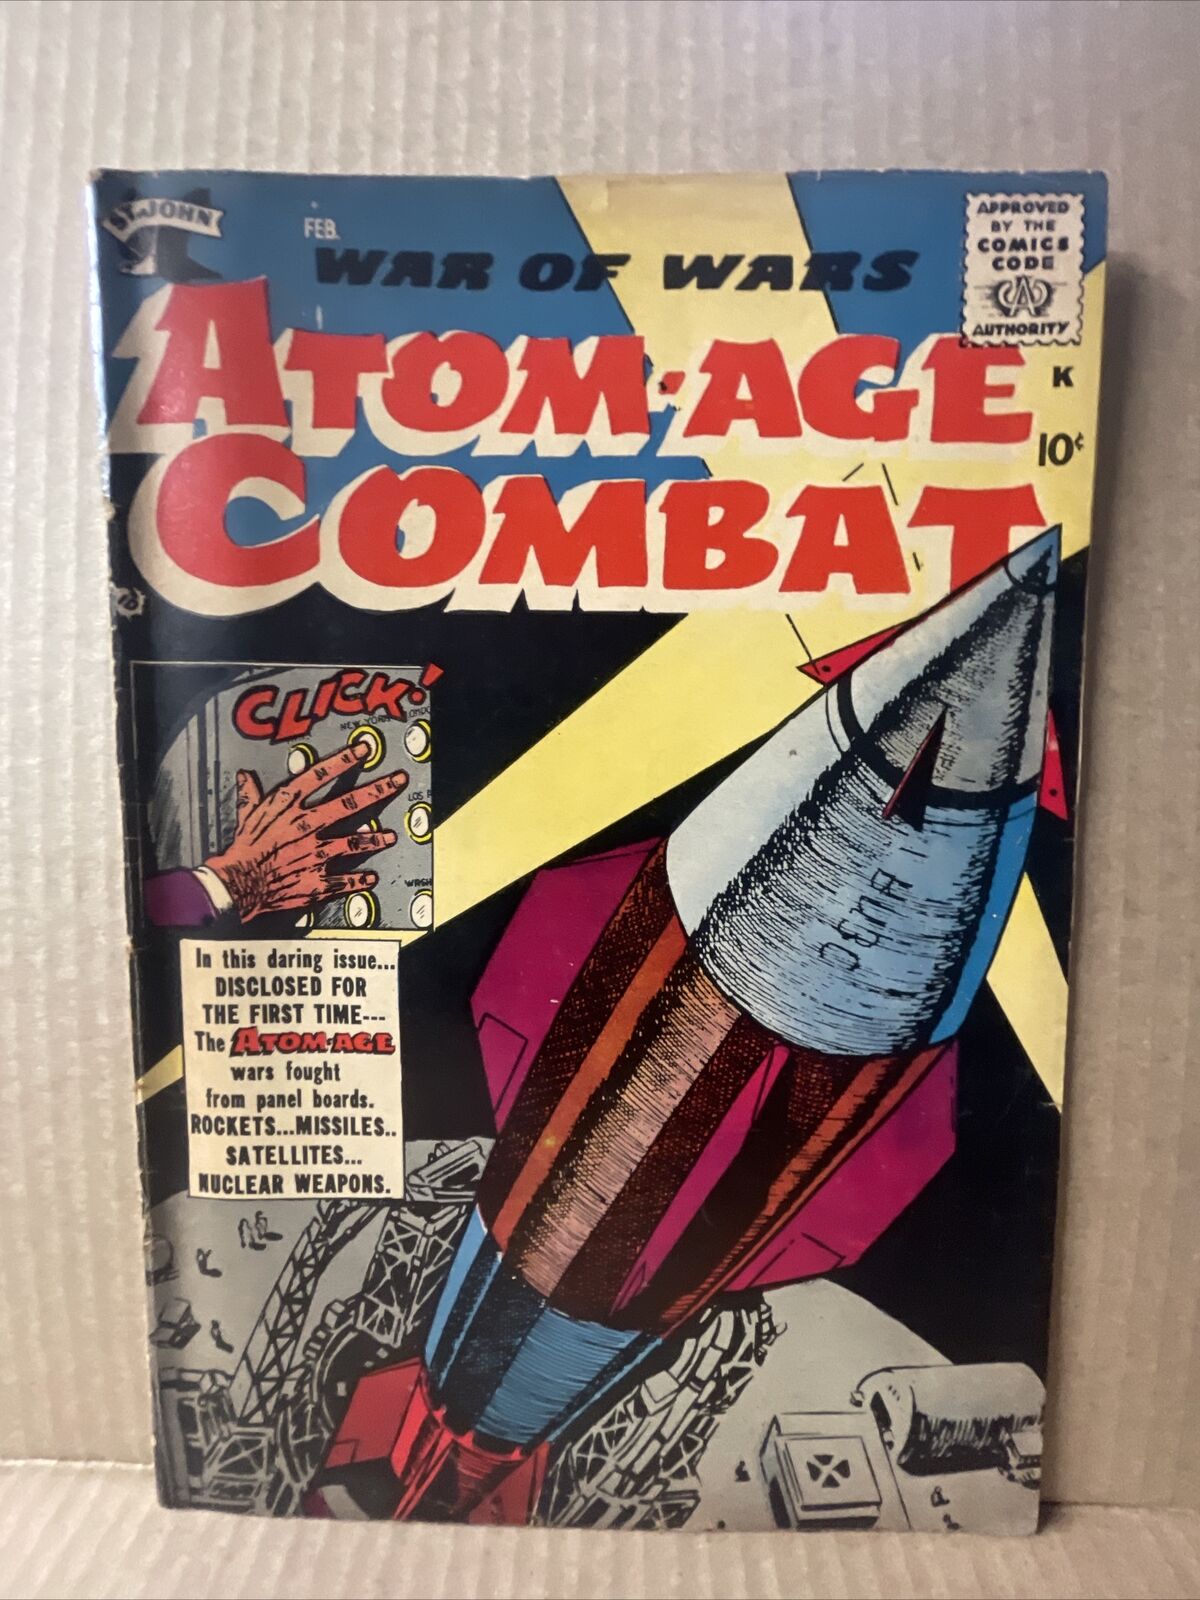 Atomic Age Combat #1 1958 St. John